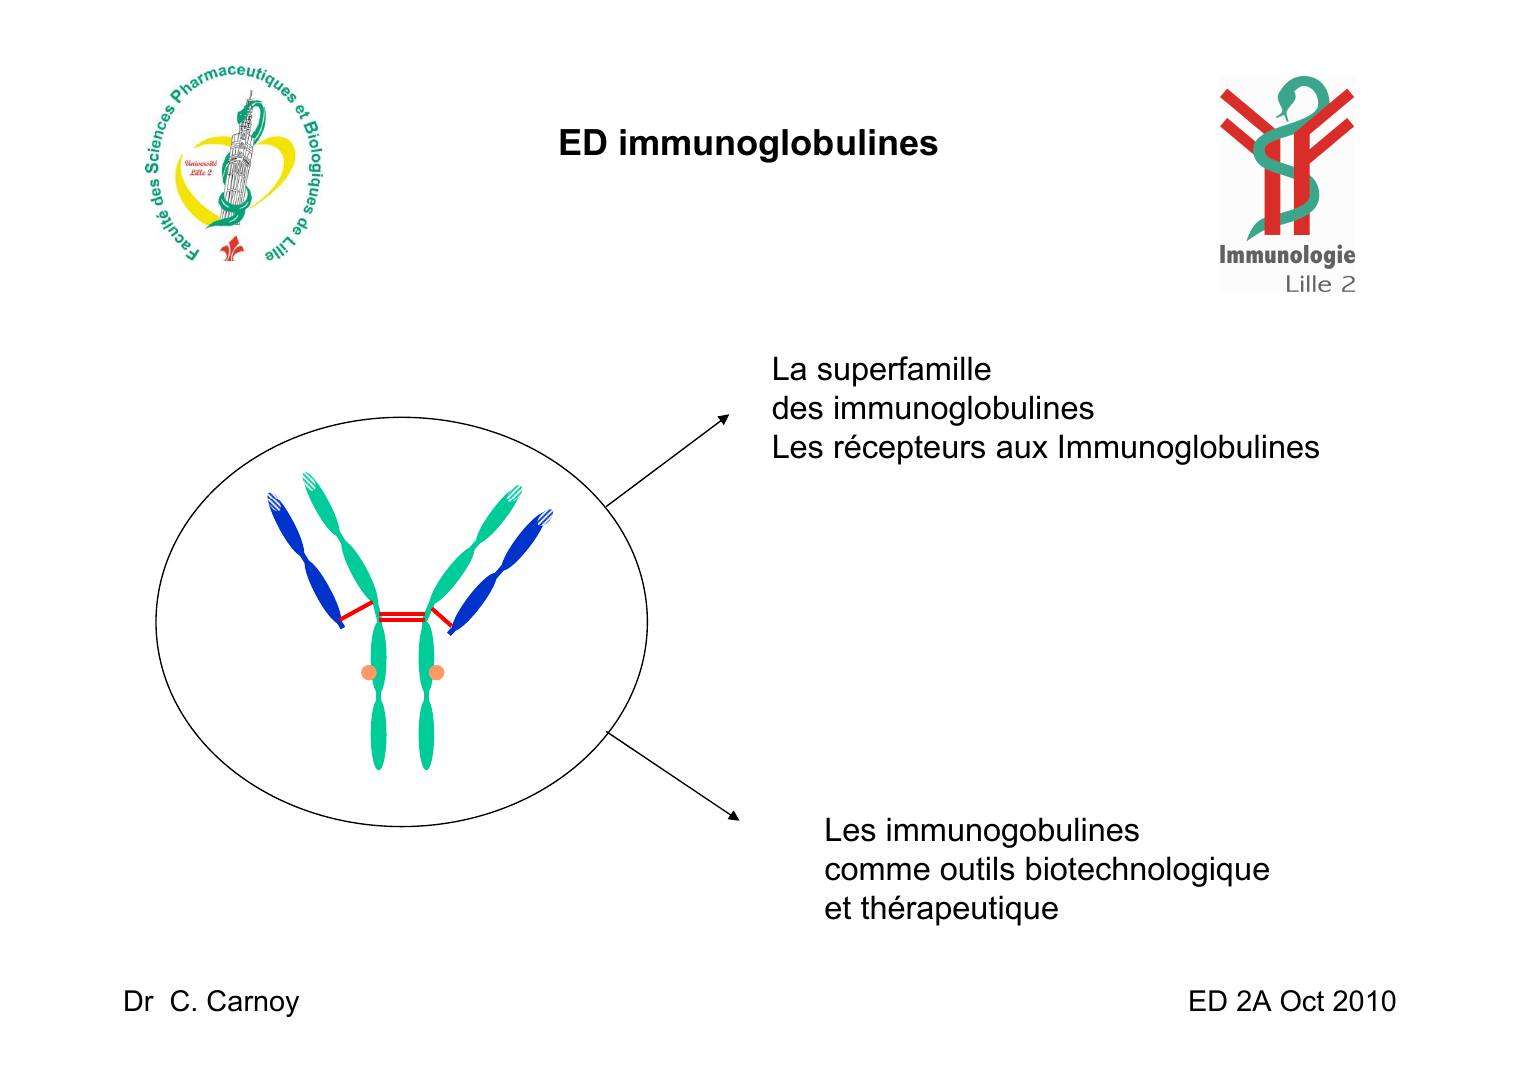 Prévisualisation du document ED immunoglobulinesLa superfamilledes immunoglobulinesLes récepteurs aux ImmunoglobulinesLes immunogobulinescomme outils biotechnologiqueet thérapeutiqueDr C.